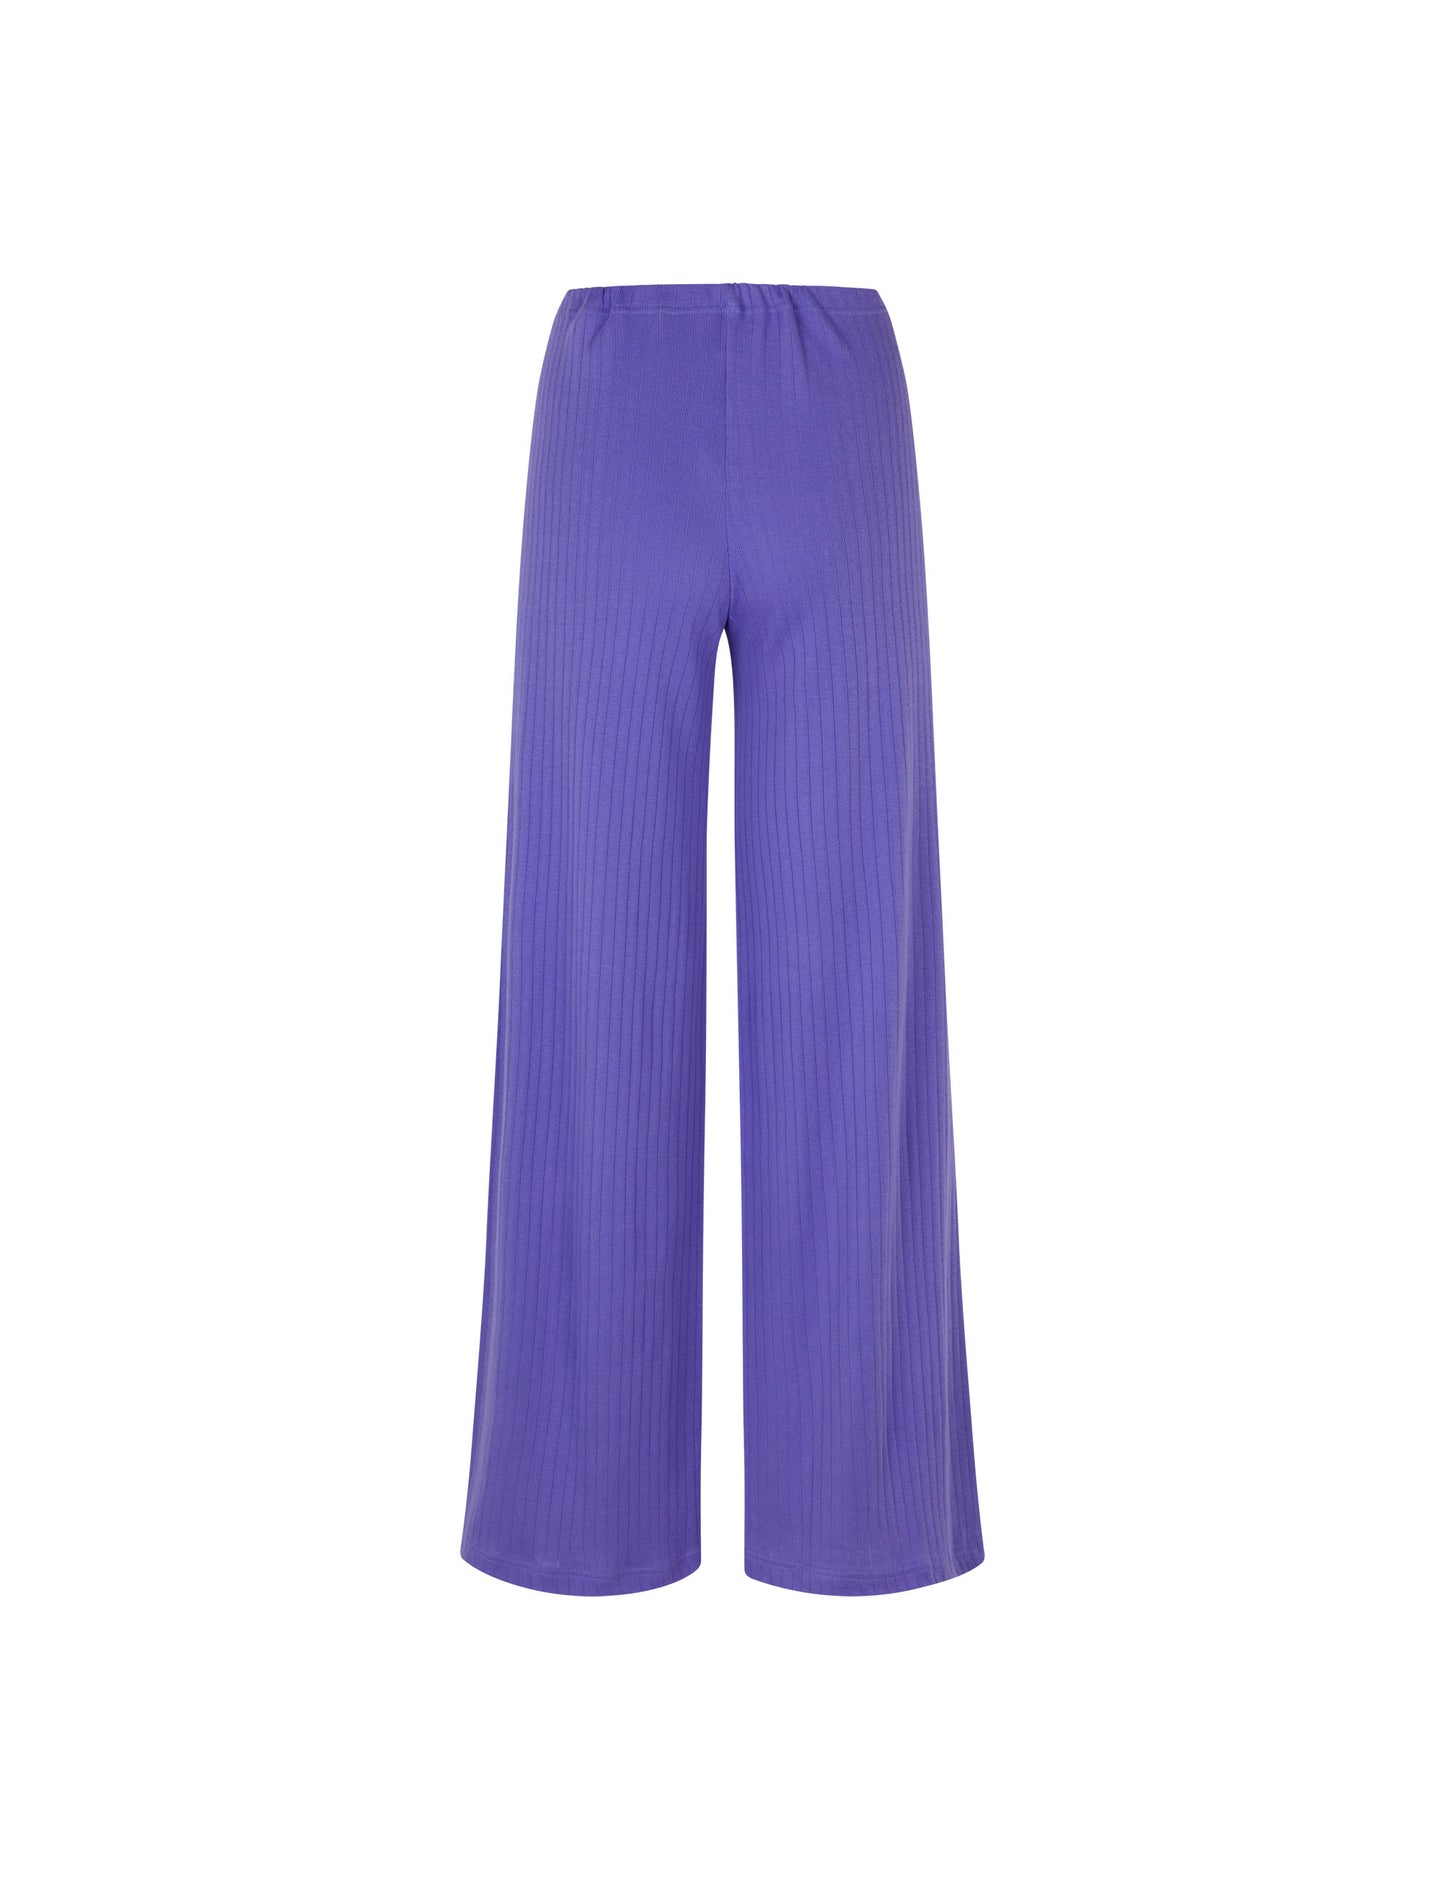 NPS Nova Pants Solid Colour, Light Purple